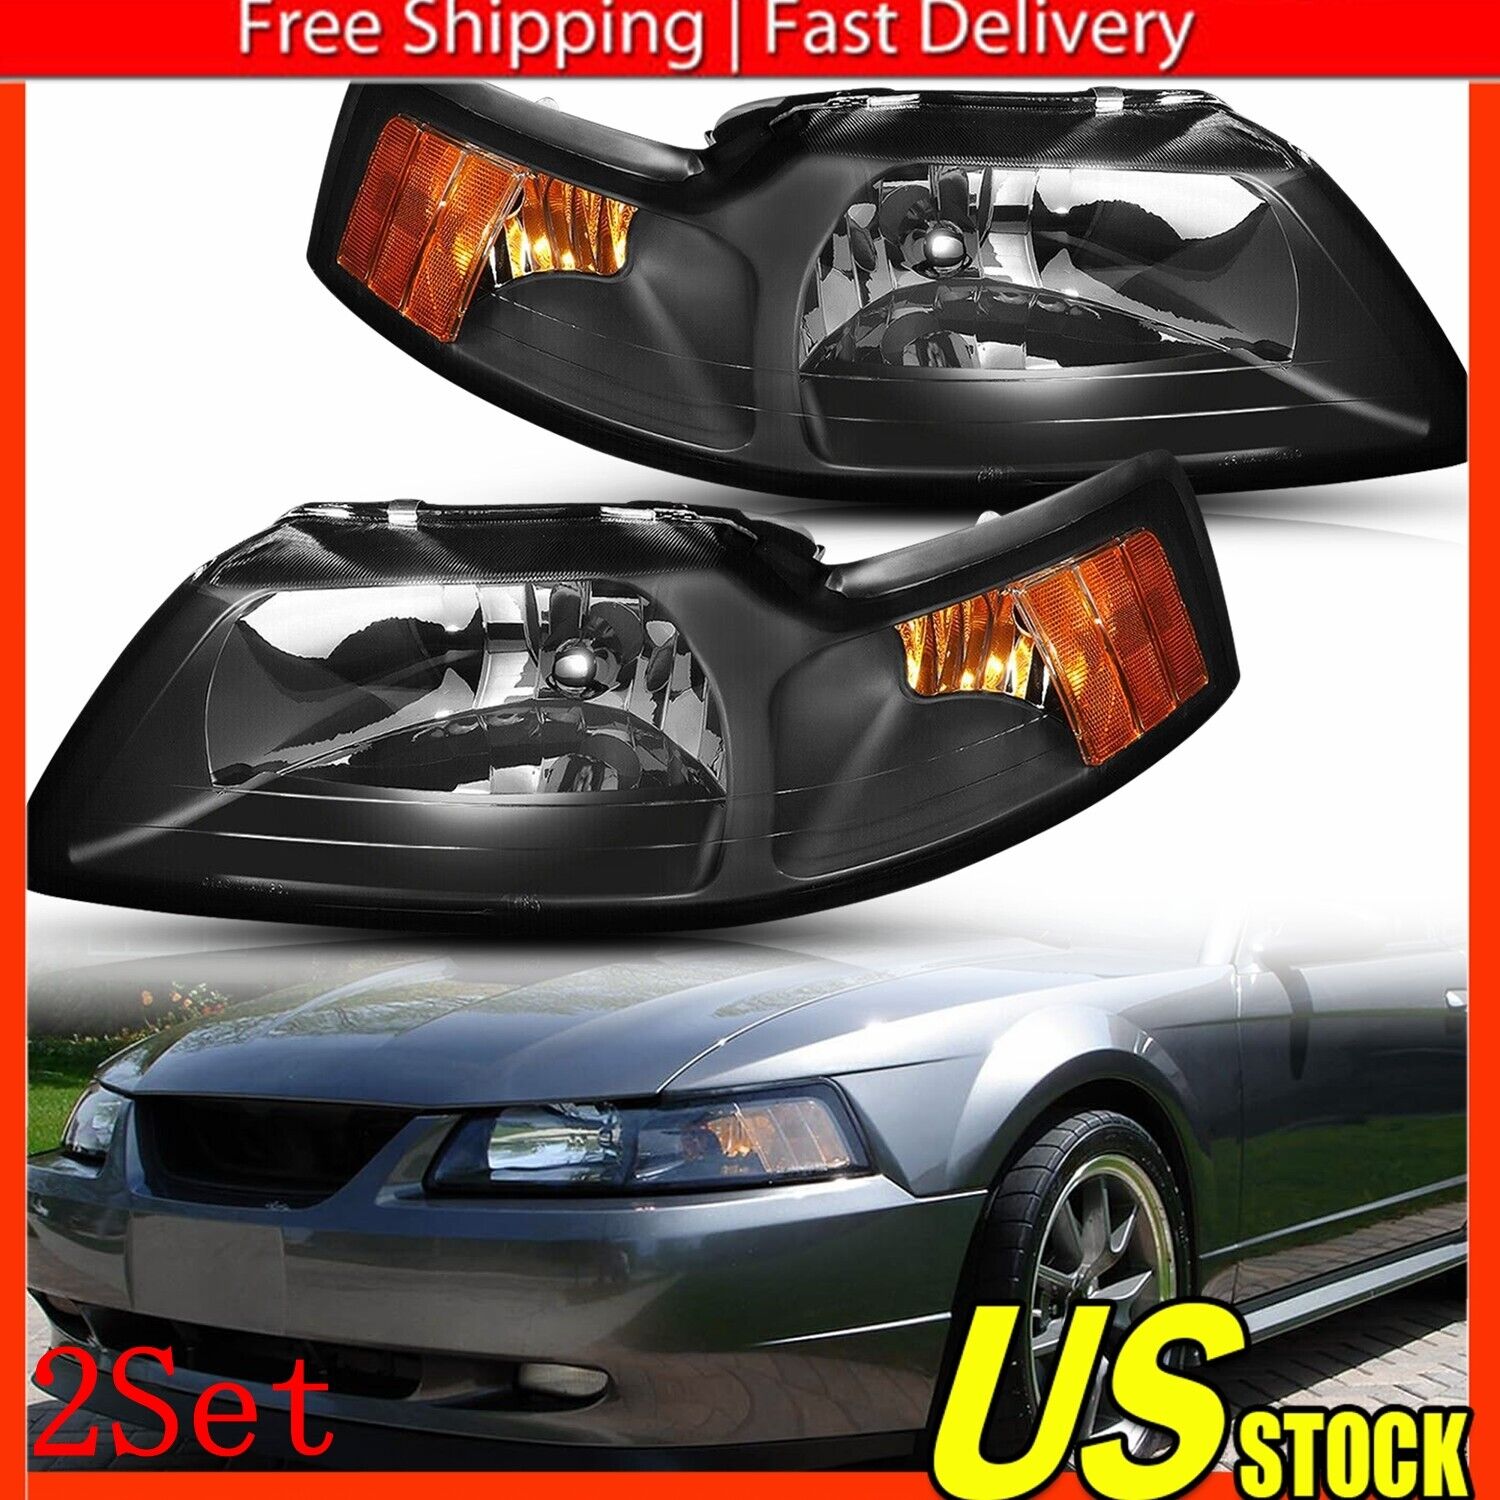 Black Fits 1999-04 Ford Mustang V6 GT SVT Cobra Headlights Left+Right 2Set